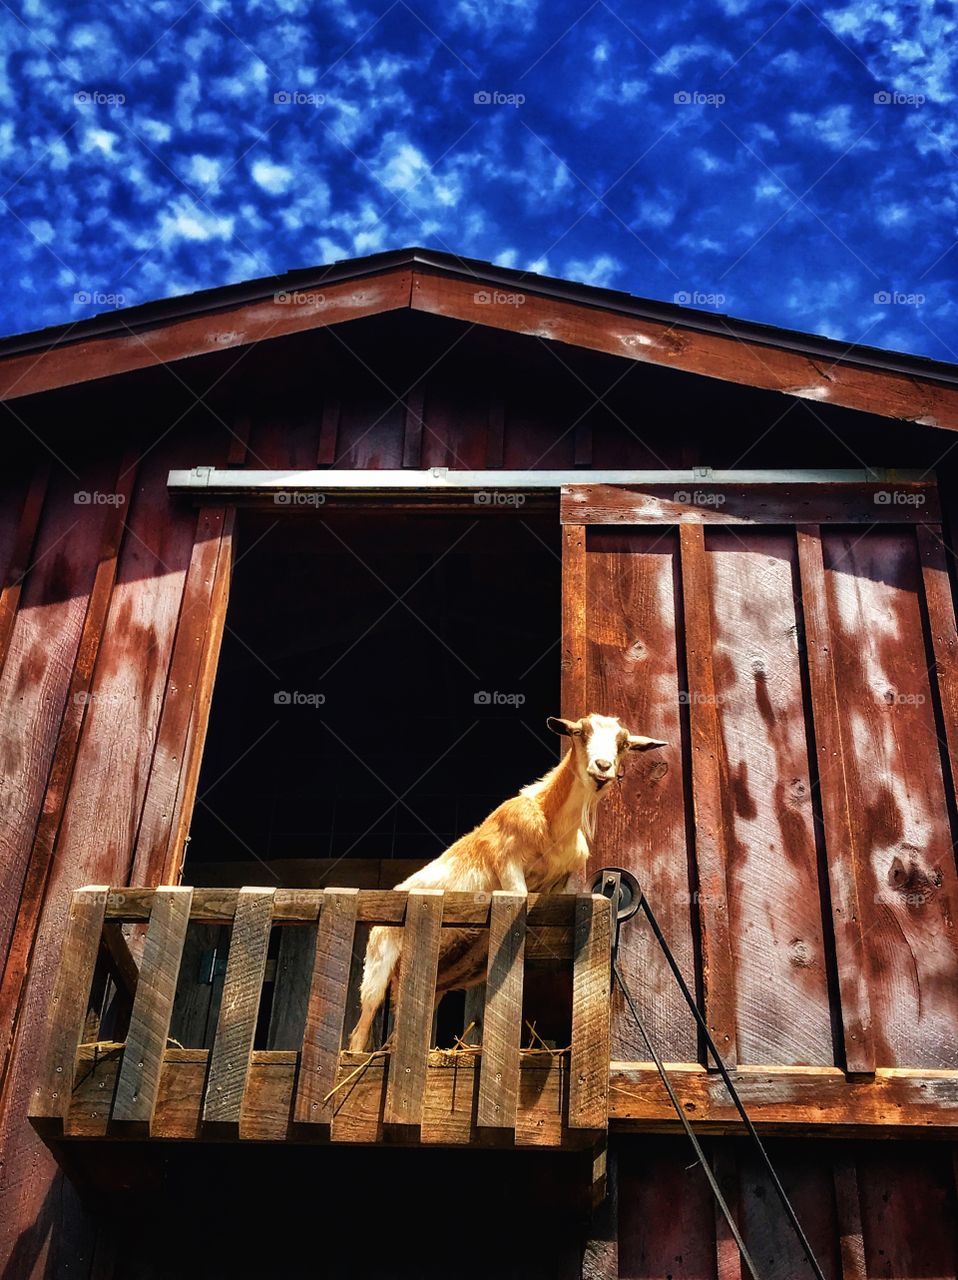 Cute little goat in a barn—taken in New Era, Michigan 